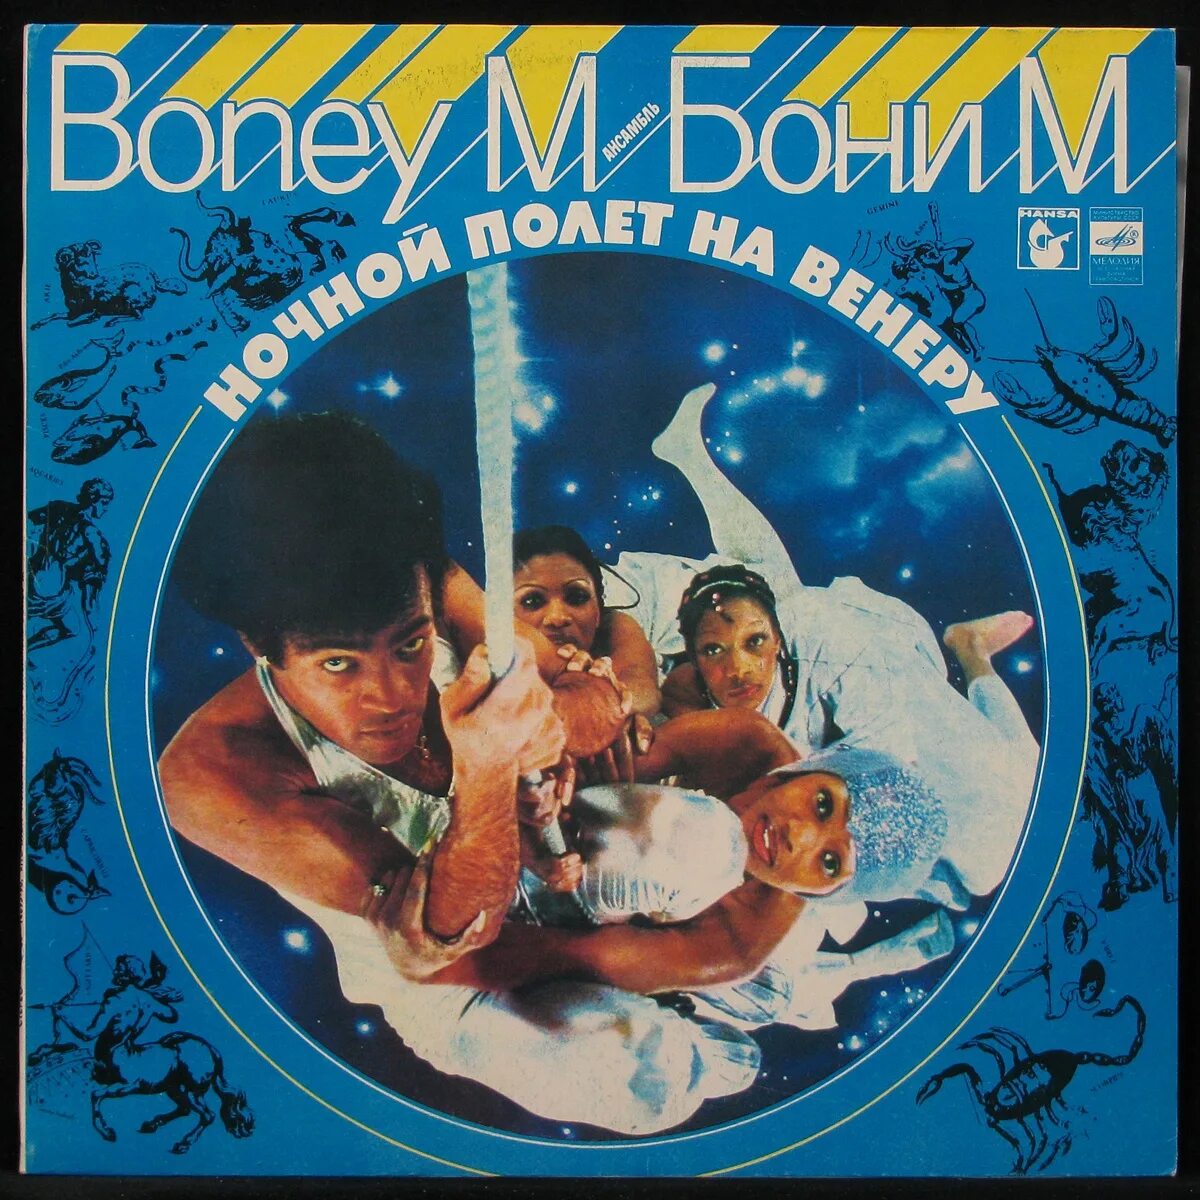 Boney m Venus Nightflight LP. Boney m Nightflight to Venus 1978 пластинки. Boney m пластинка. Бони м. ночной полет на Венеру ("мелодия", с60-14895-96] 1980) обложка.